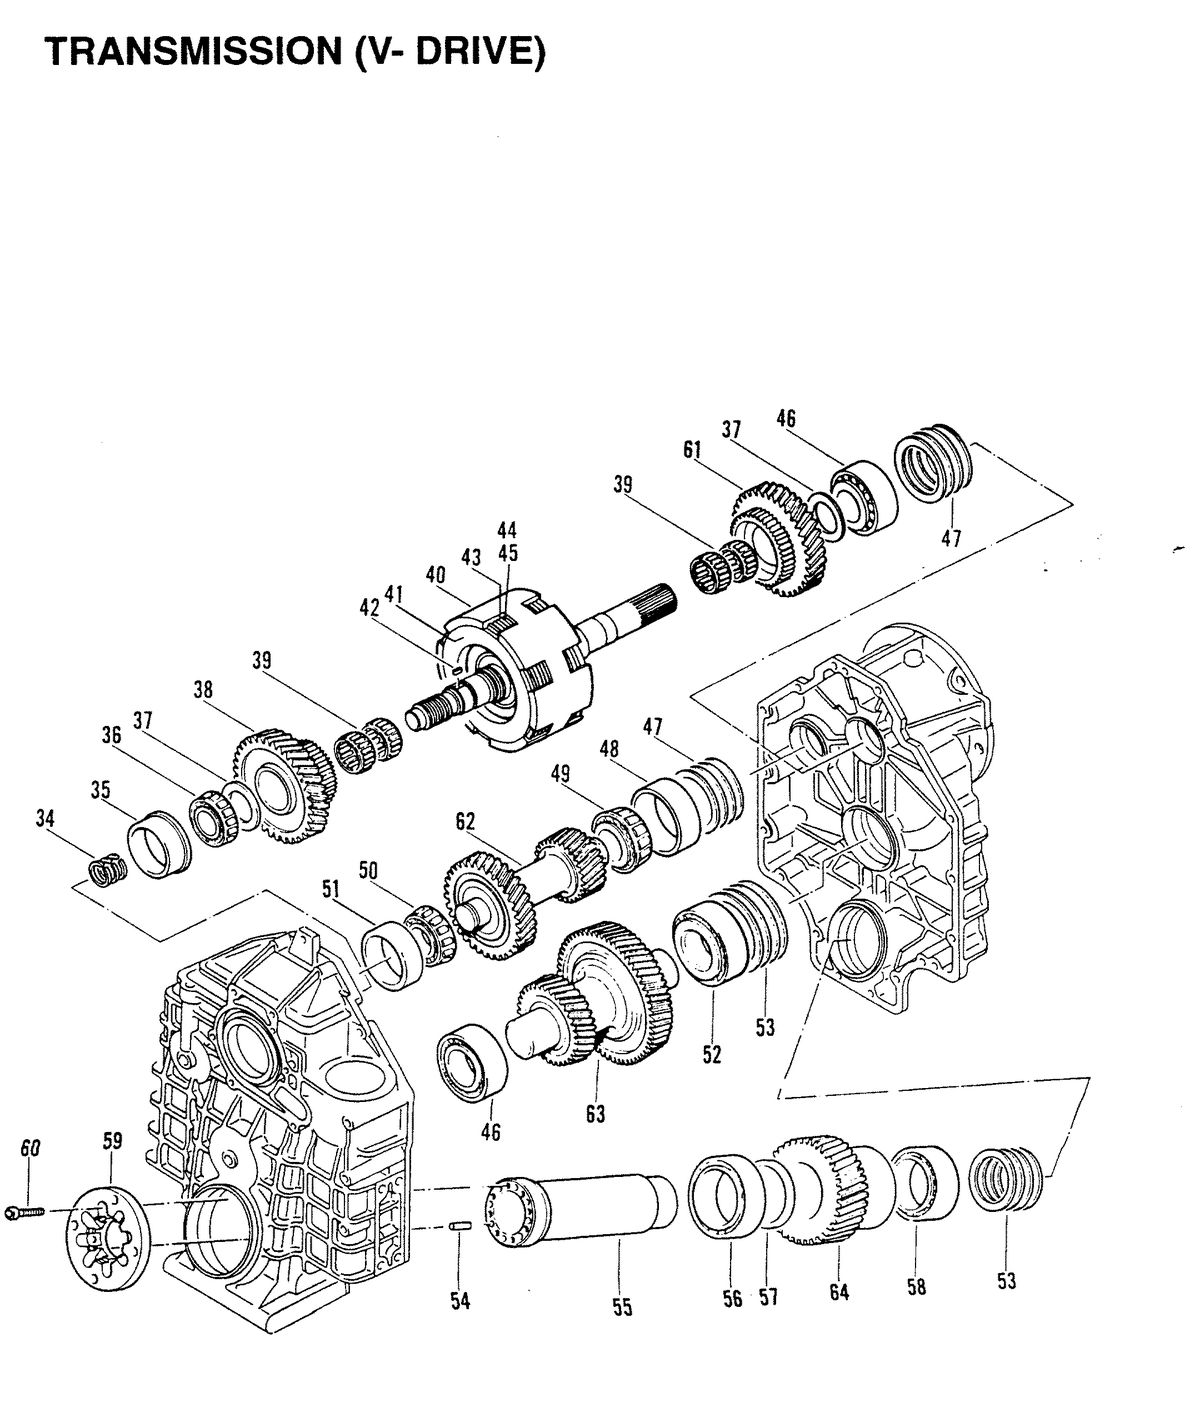 MERCRUISER D-254 TURBO ACDIESEL ENGINE STERN DRIVE/INBOARD TRANSMISSION (V-DRIVE) (INBOARD)